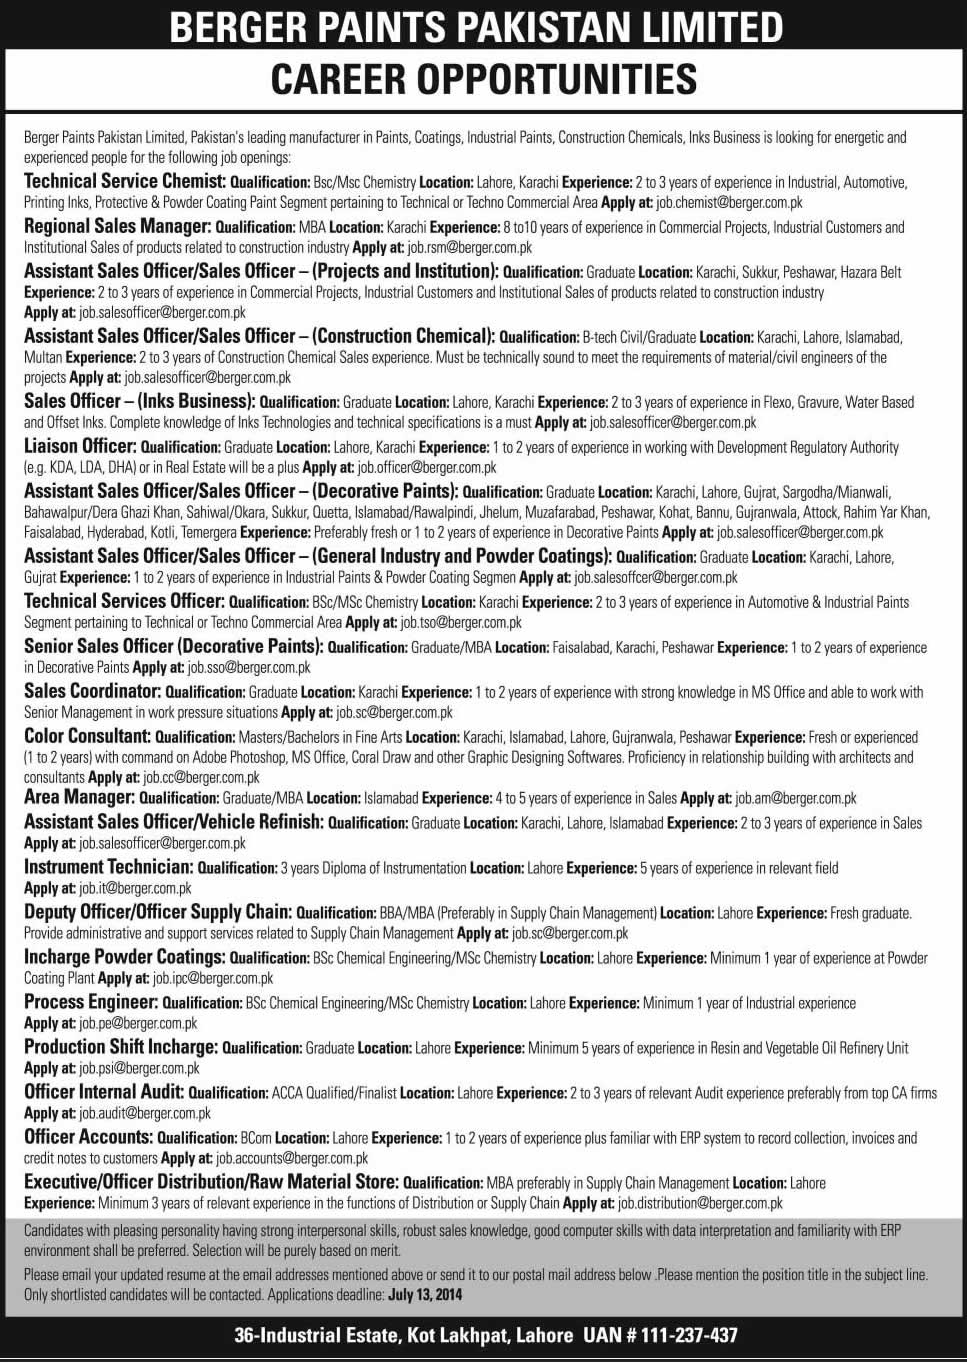 Berger Paints Jobs 2014 July Pakistan Latest Advertisement